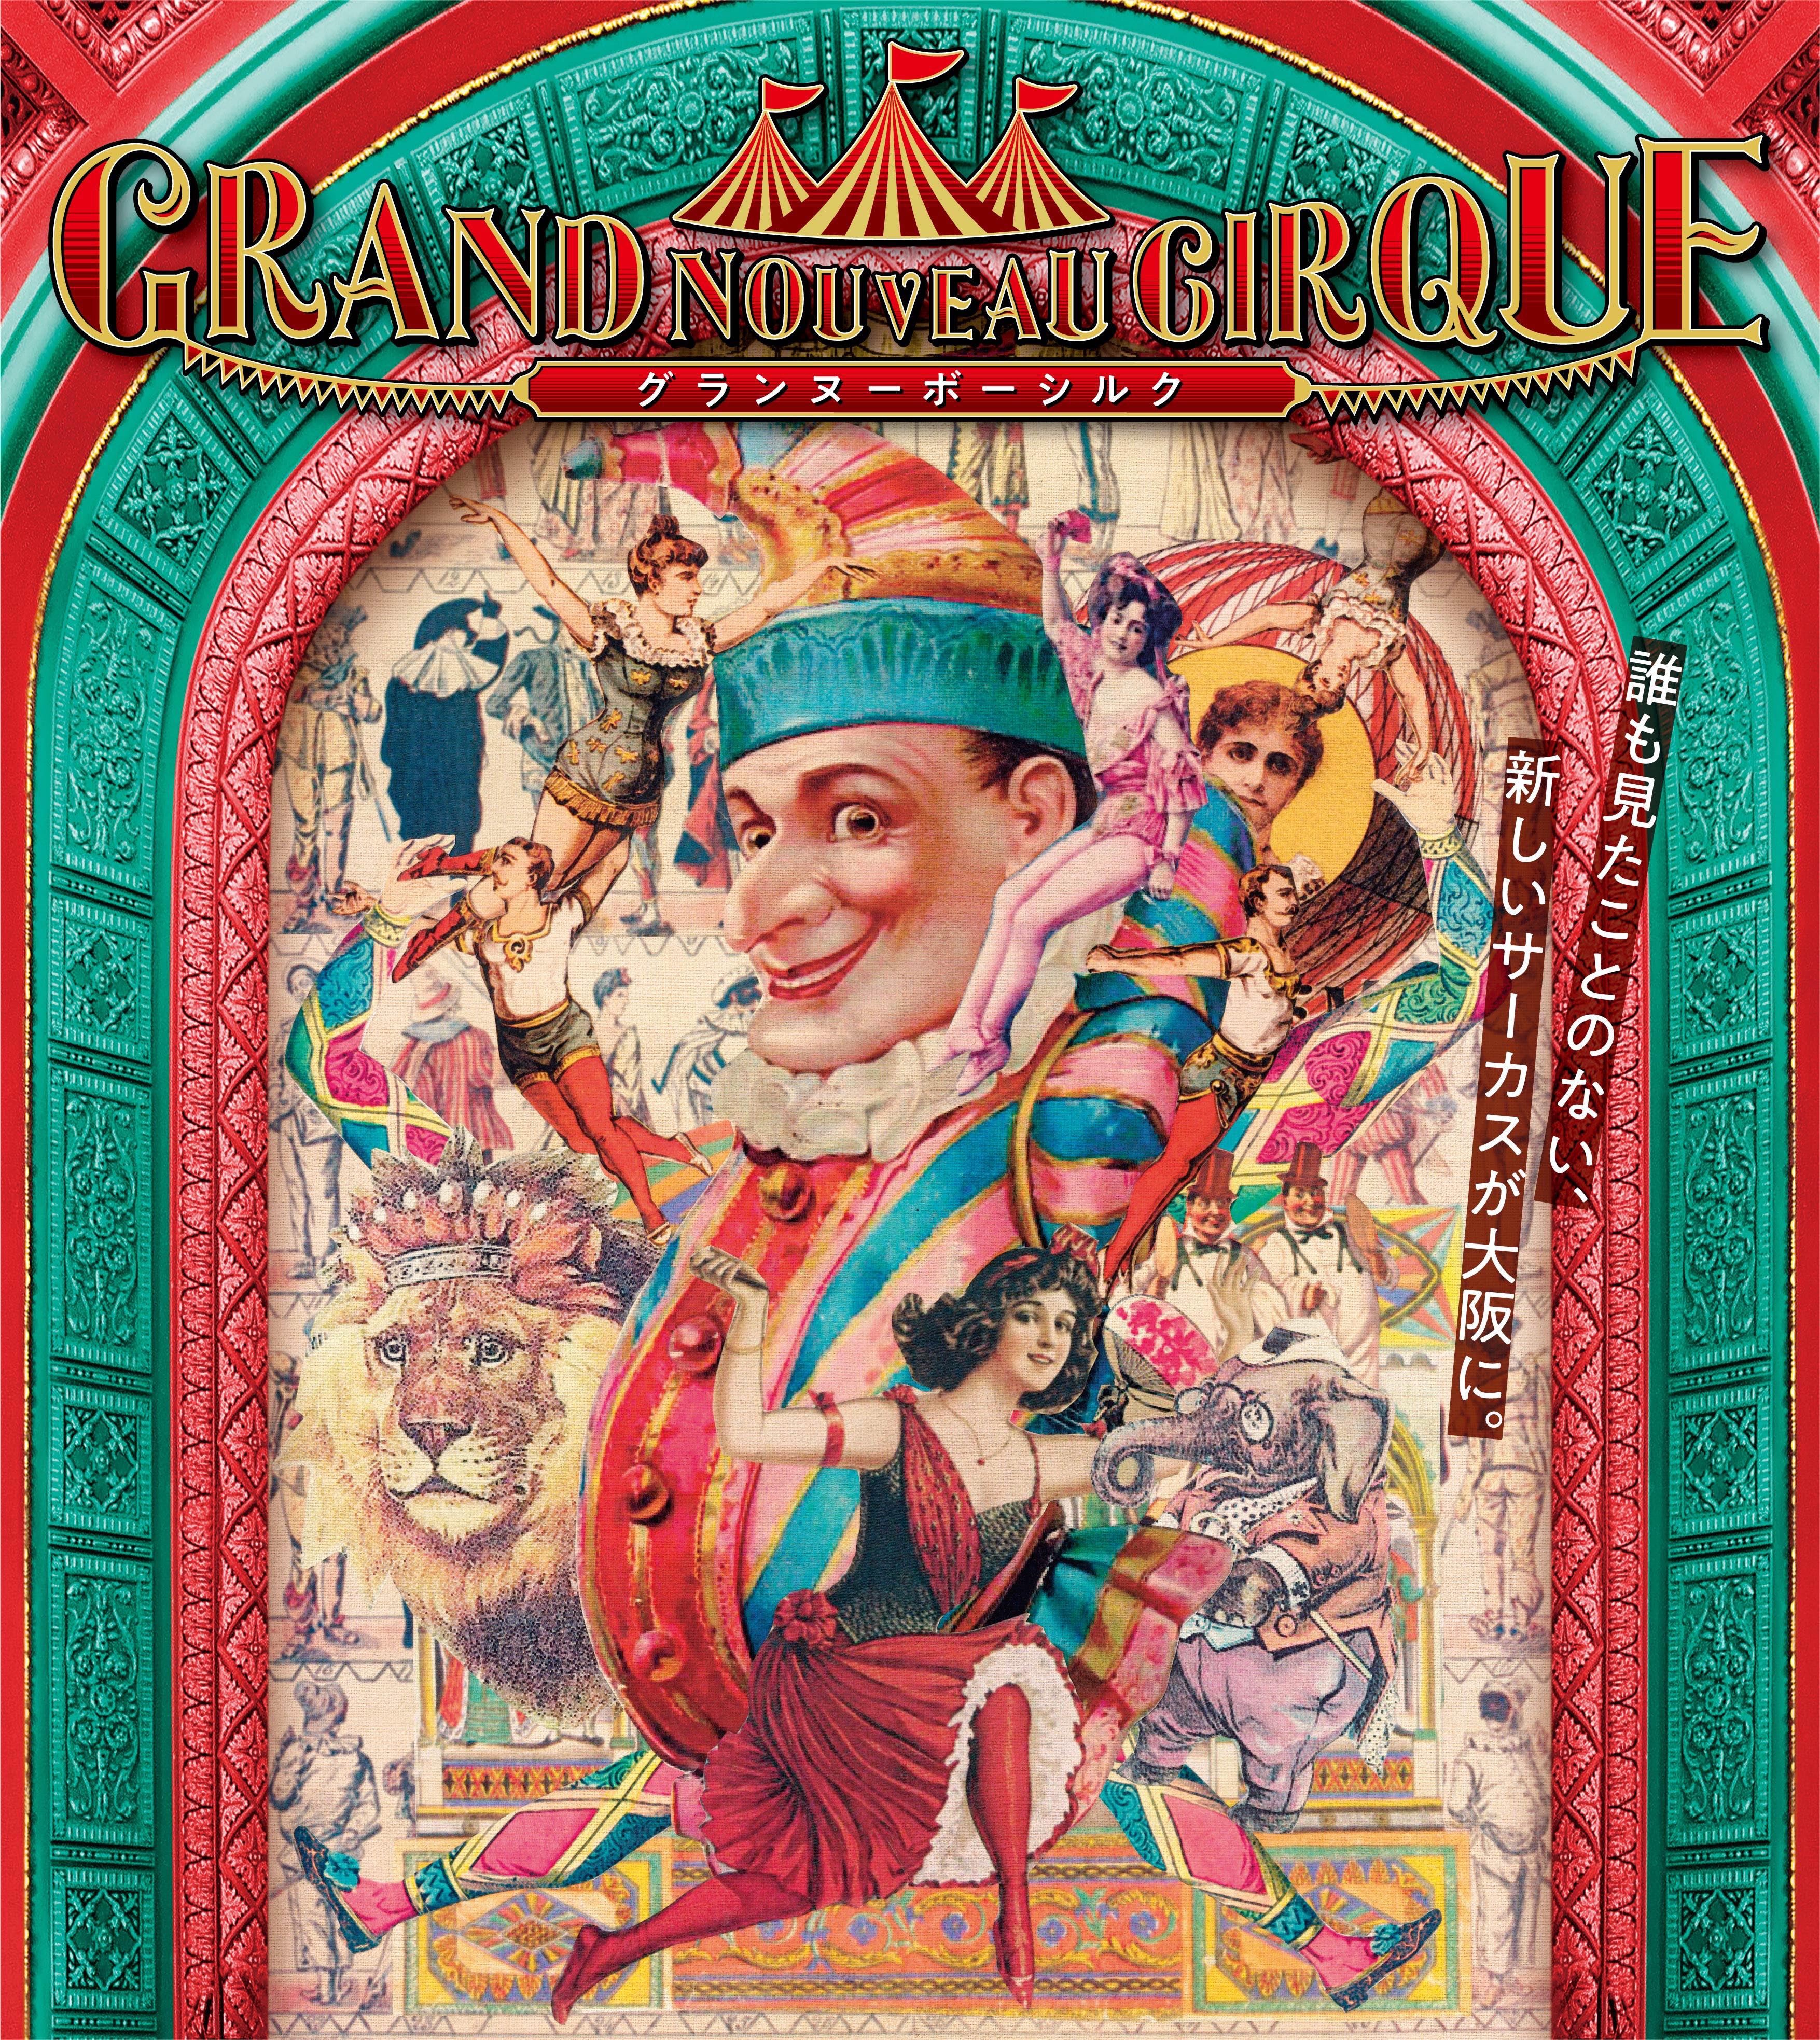 「Grand Nouveau Cirque / グランヌーボーシルク」開催